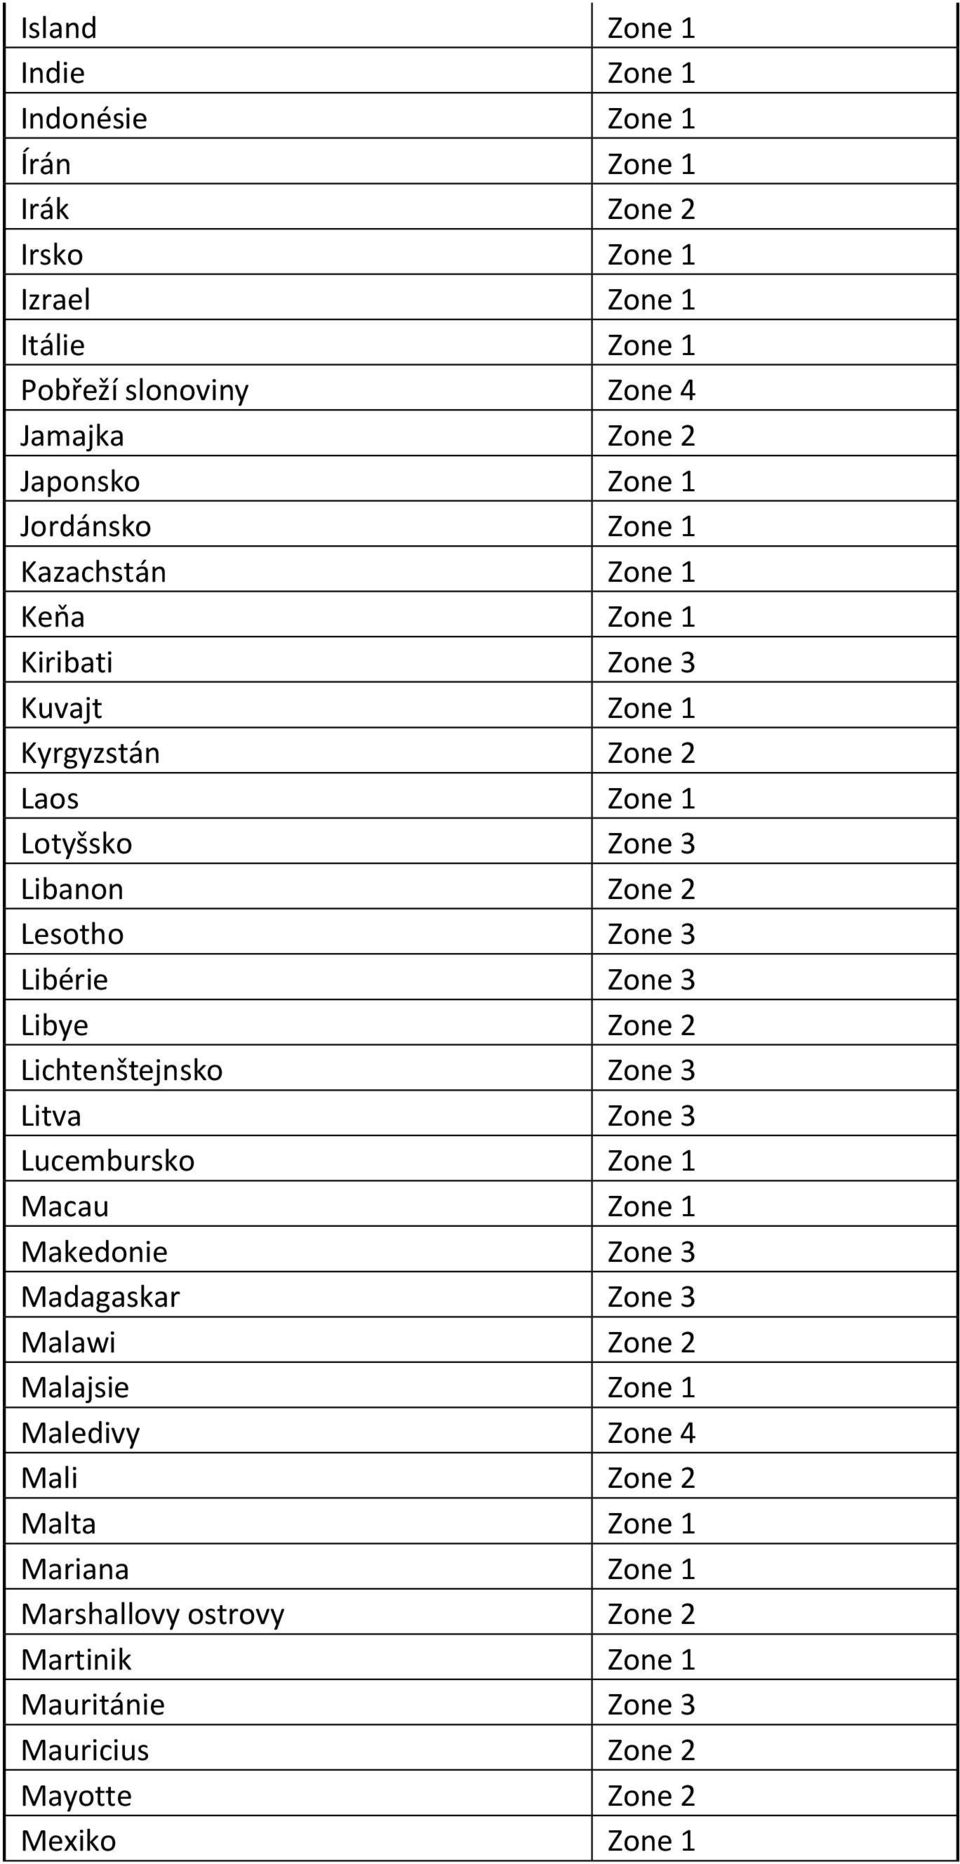 Libérie Zone 3 Libye Zone 2 Lichtenštejnsko Zone 3 Litva Zone 3 Lucembursko Zone 1 Macau Zone 1 Makedonie Zone 3 Madagaskar Zone 3 Malawi Zone 2 Malajsie Zone 1